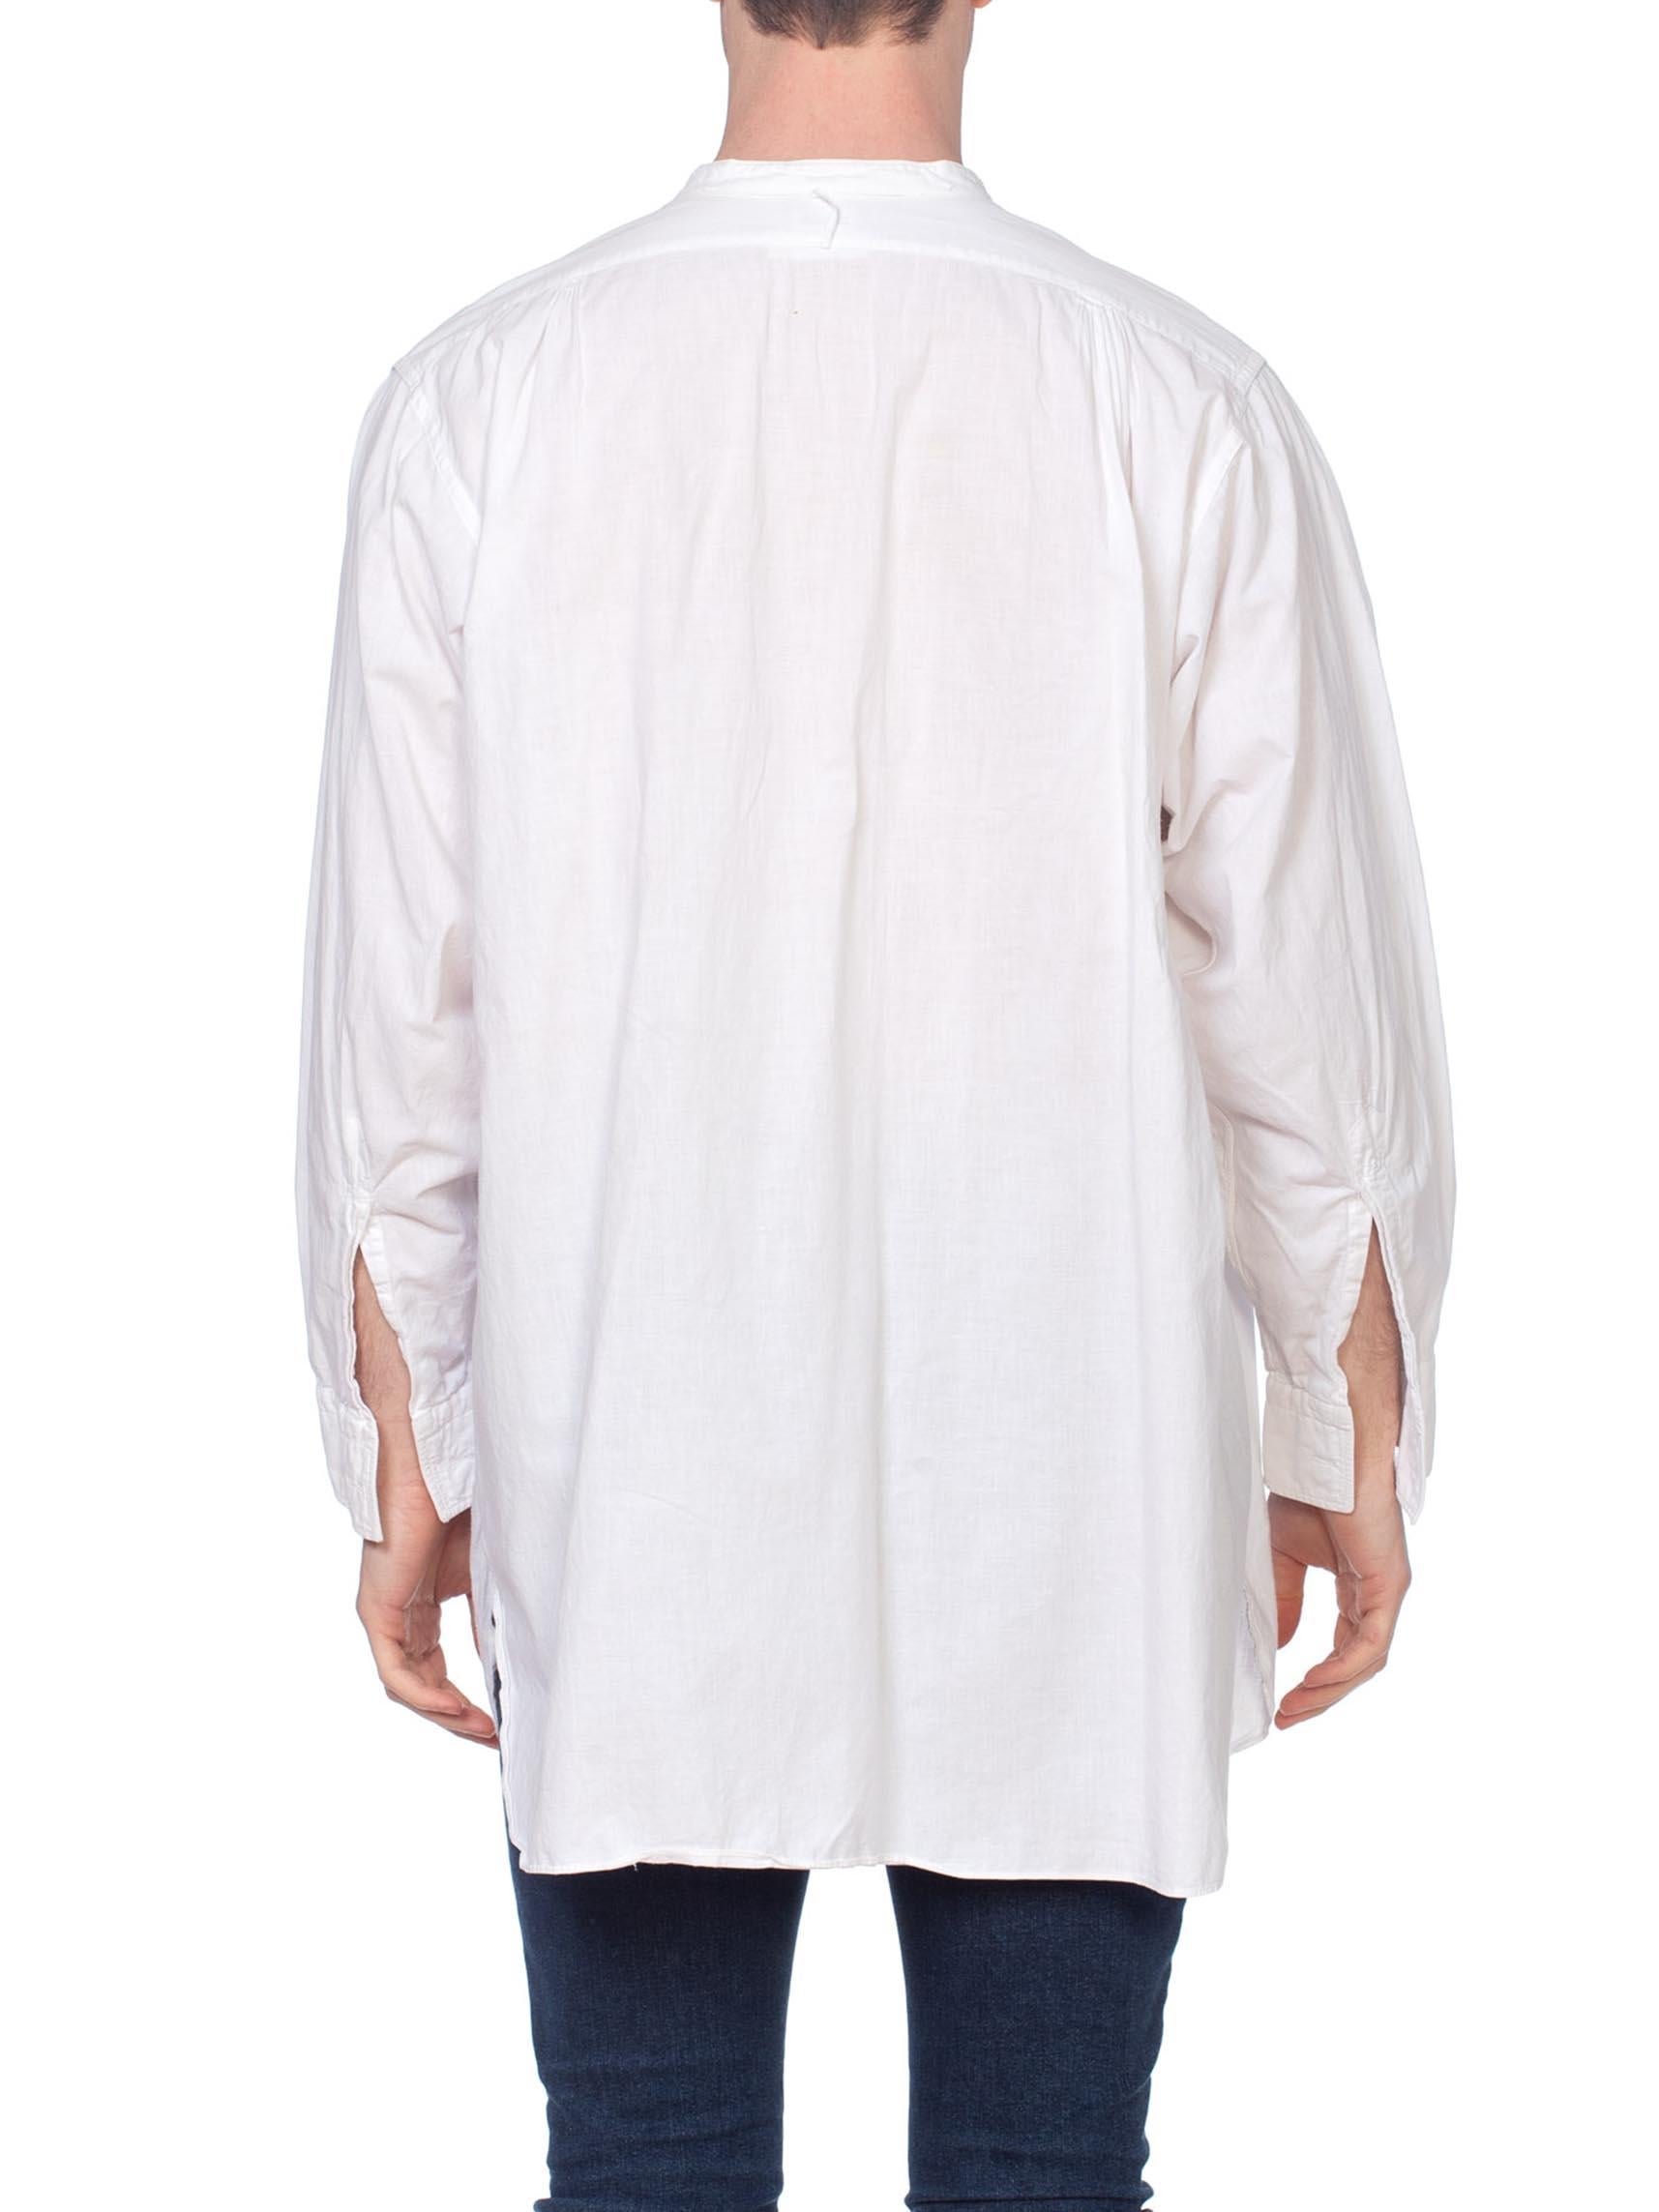 1900S White Cotton Men's Formal Bib Front Shirt By Arrow For Sale 1